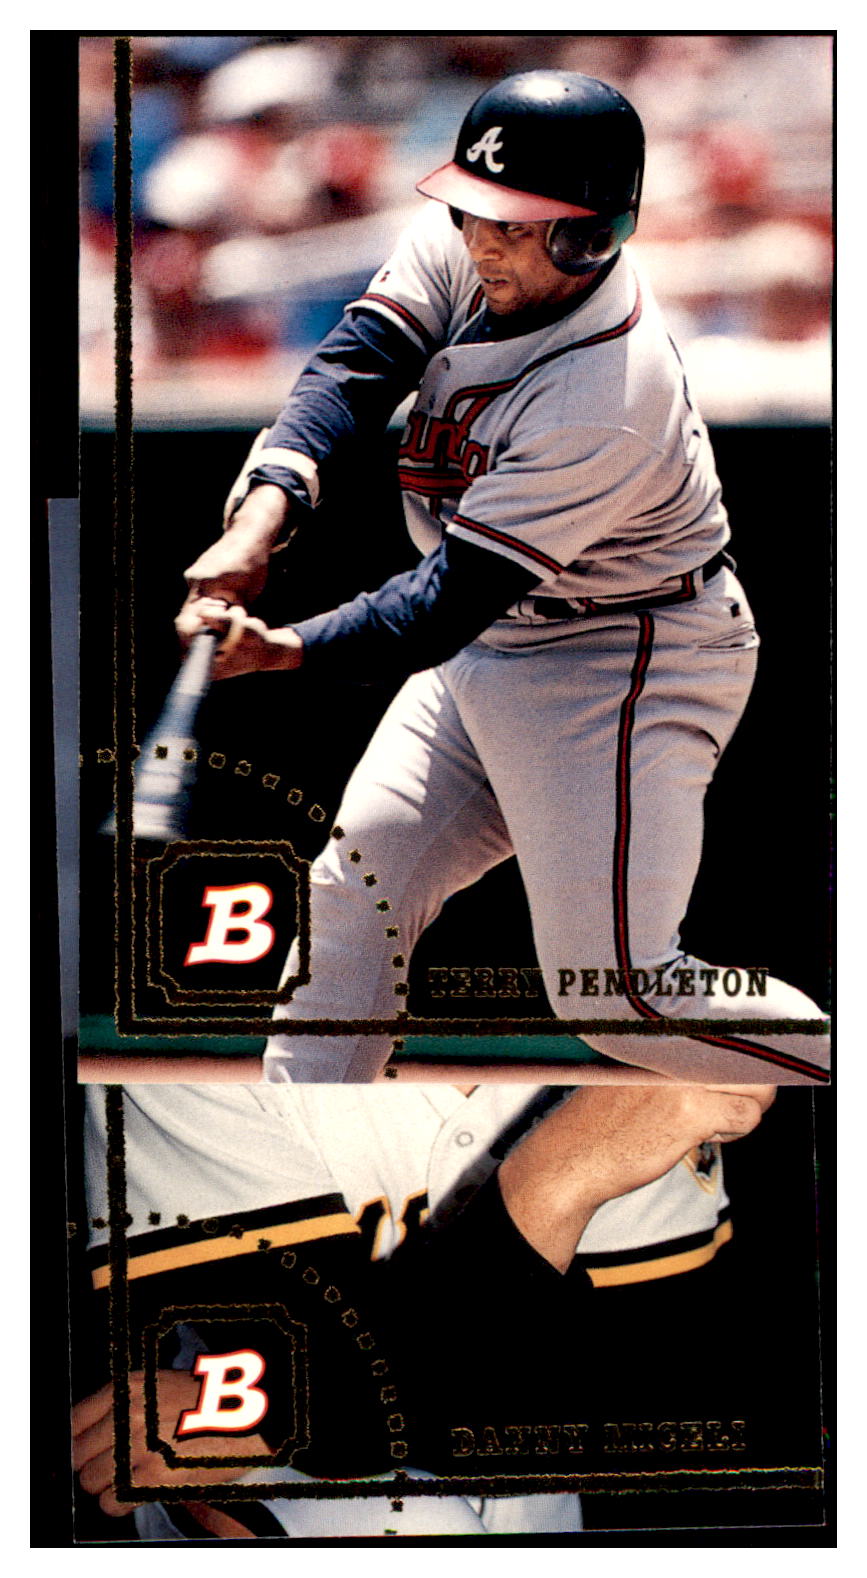 1994 Bowman Terry, Pendleton Atlanta Braves Baseball, Card BOWV3